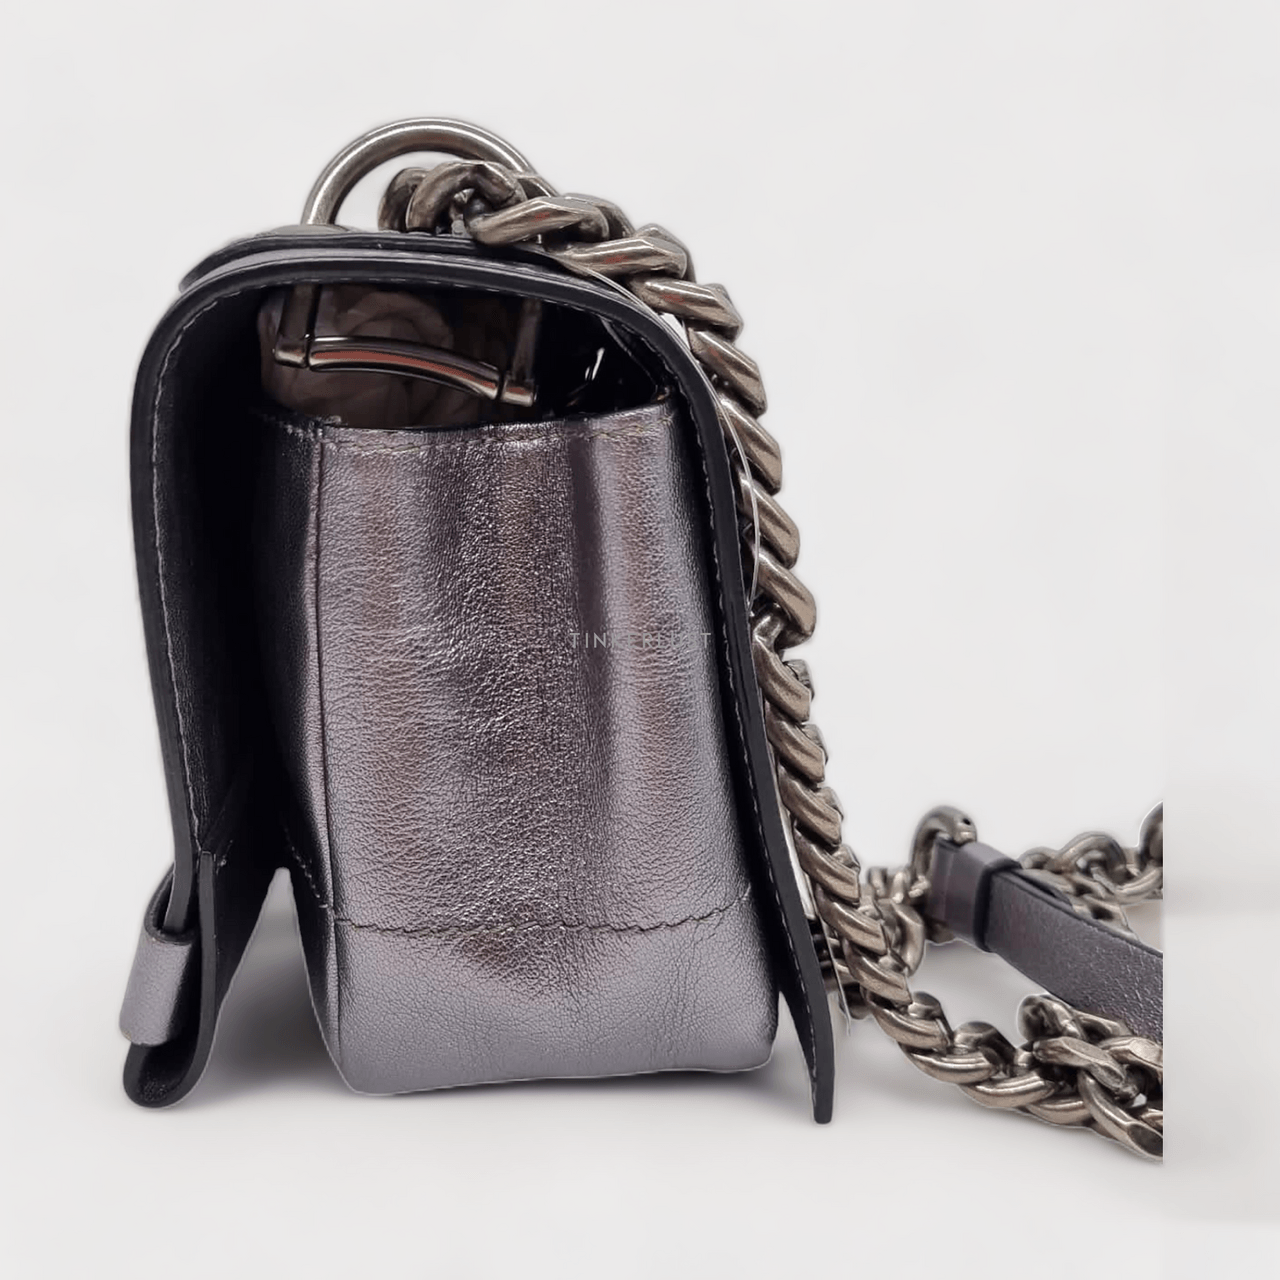 Moschino Leather Grey Metalic Shoulder Bag